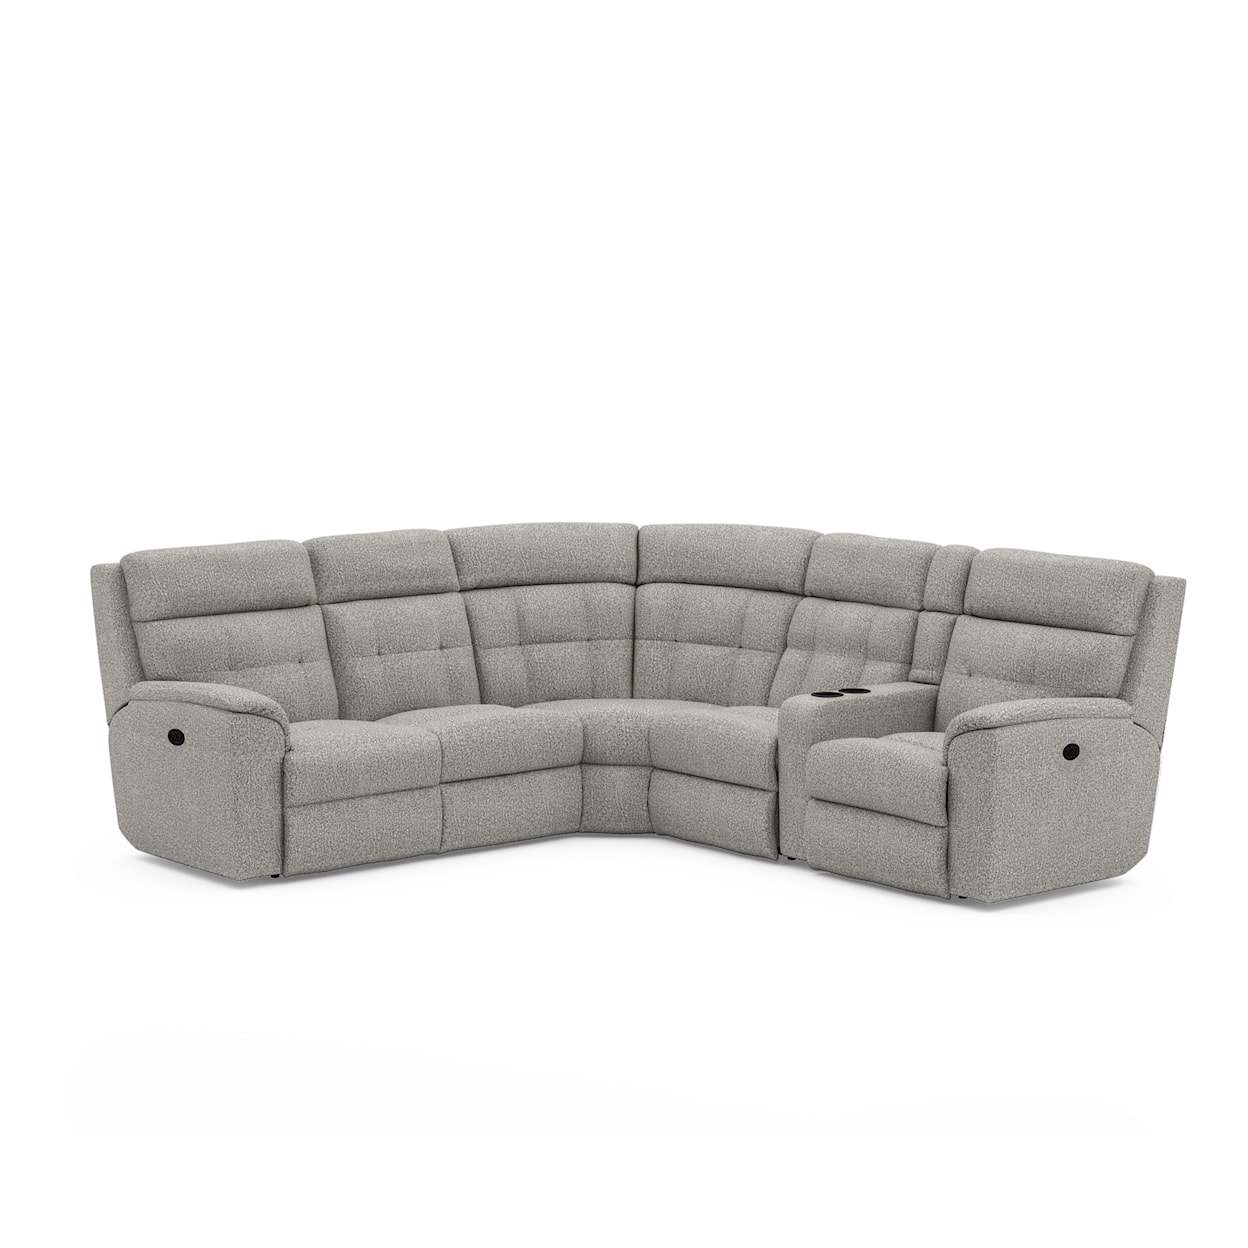 Flexsteel Mason Sectional Sofa